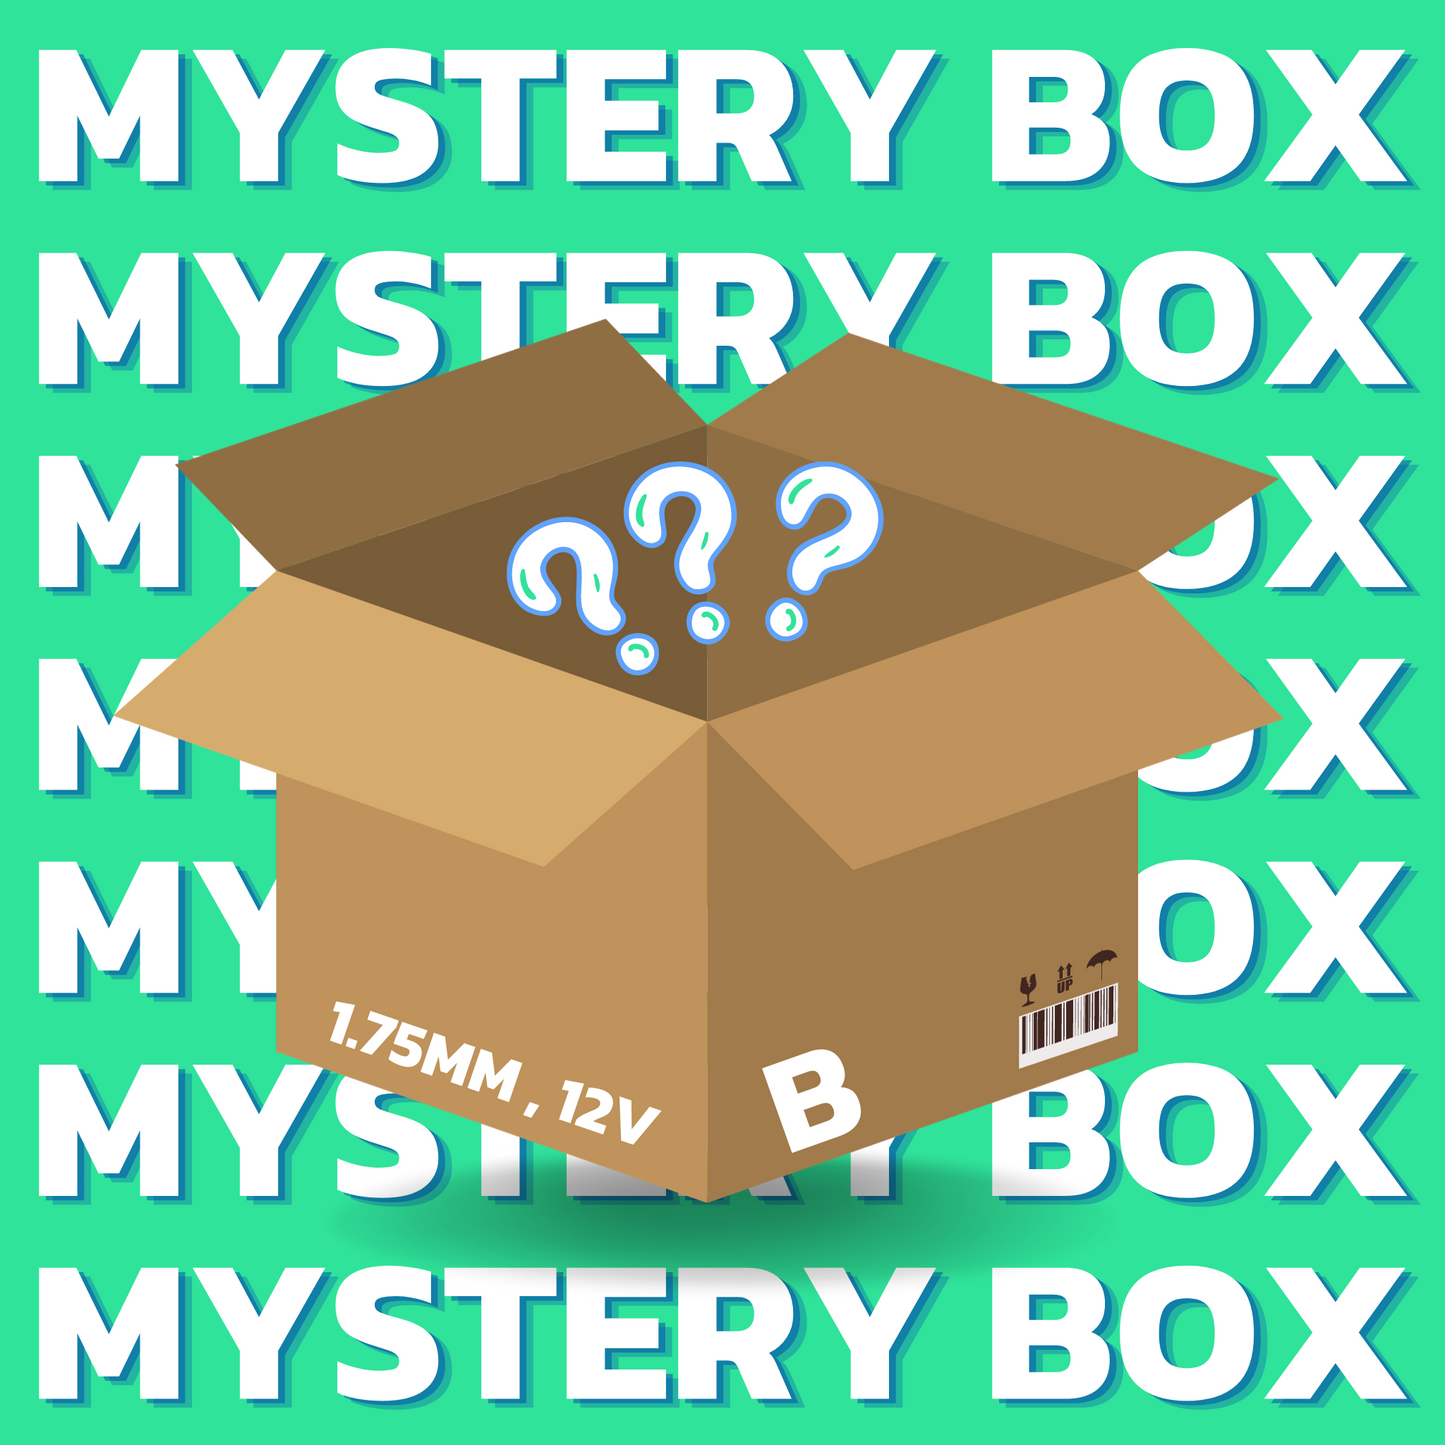 E3D Mystery Boxes